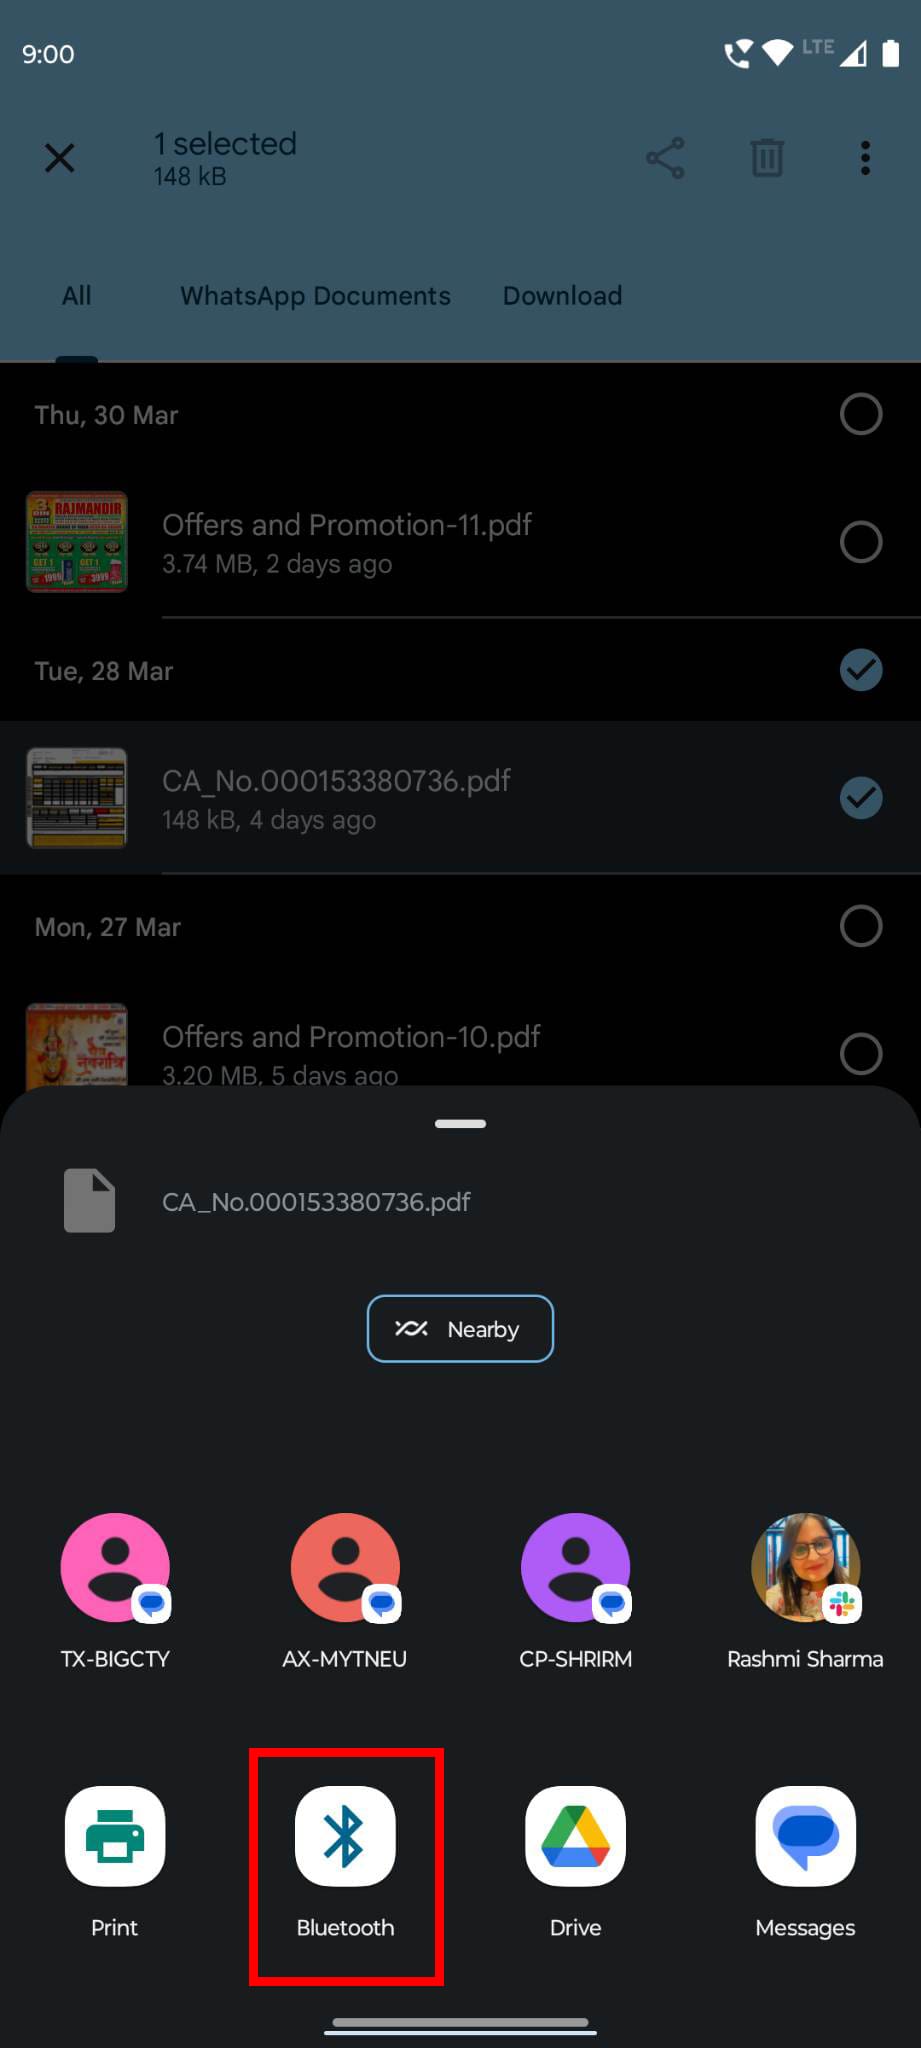 Tap Bluetooth icon to send via Bluetooth